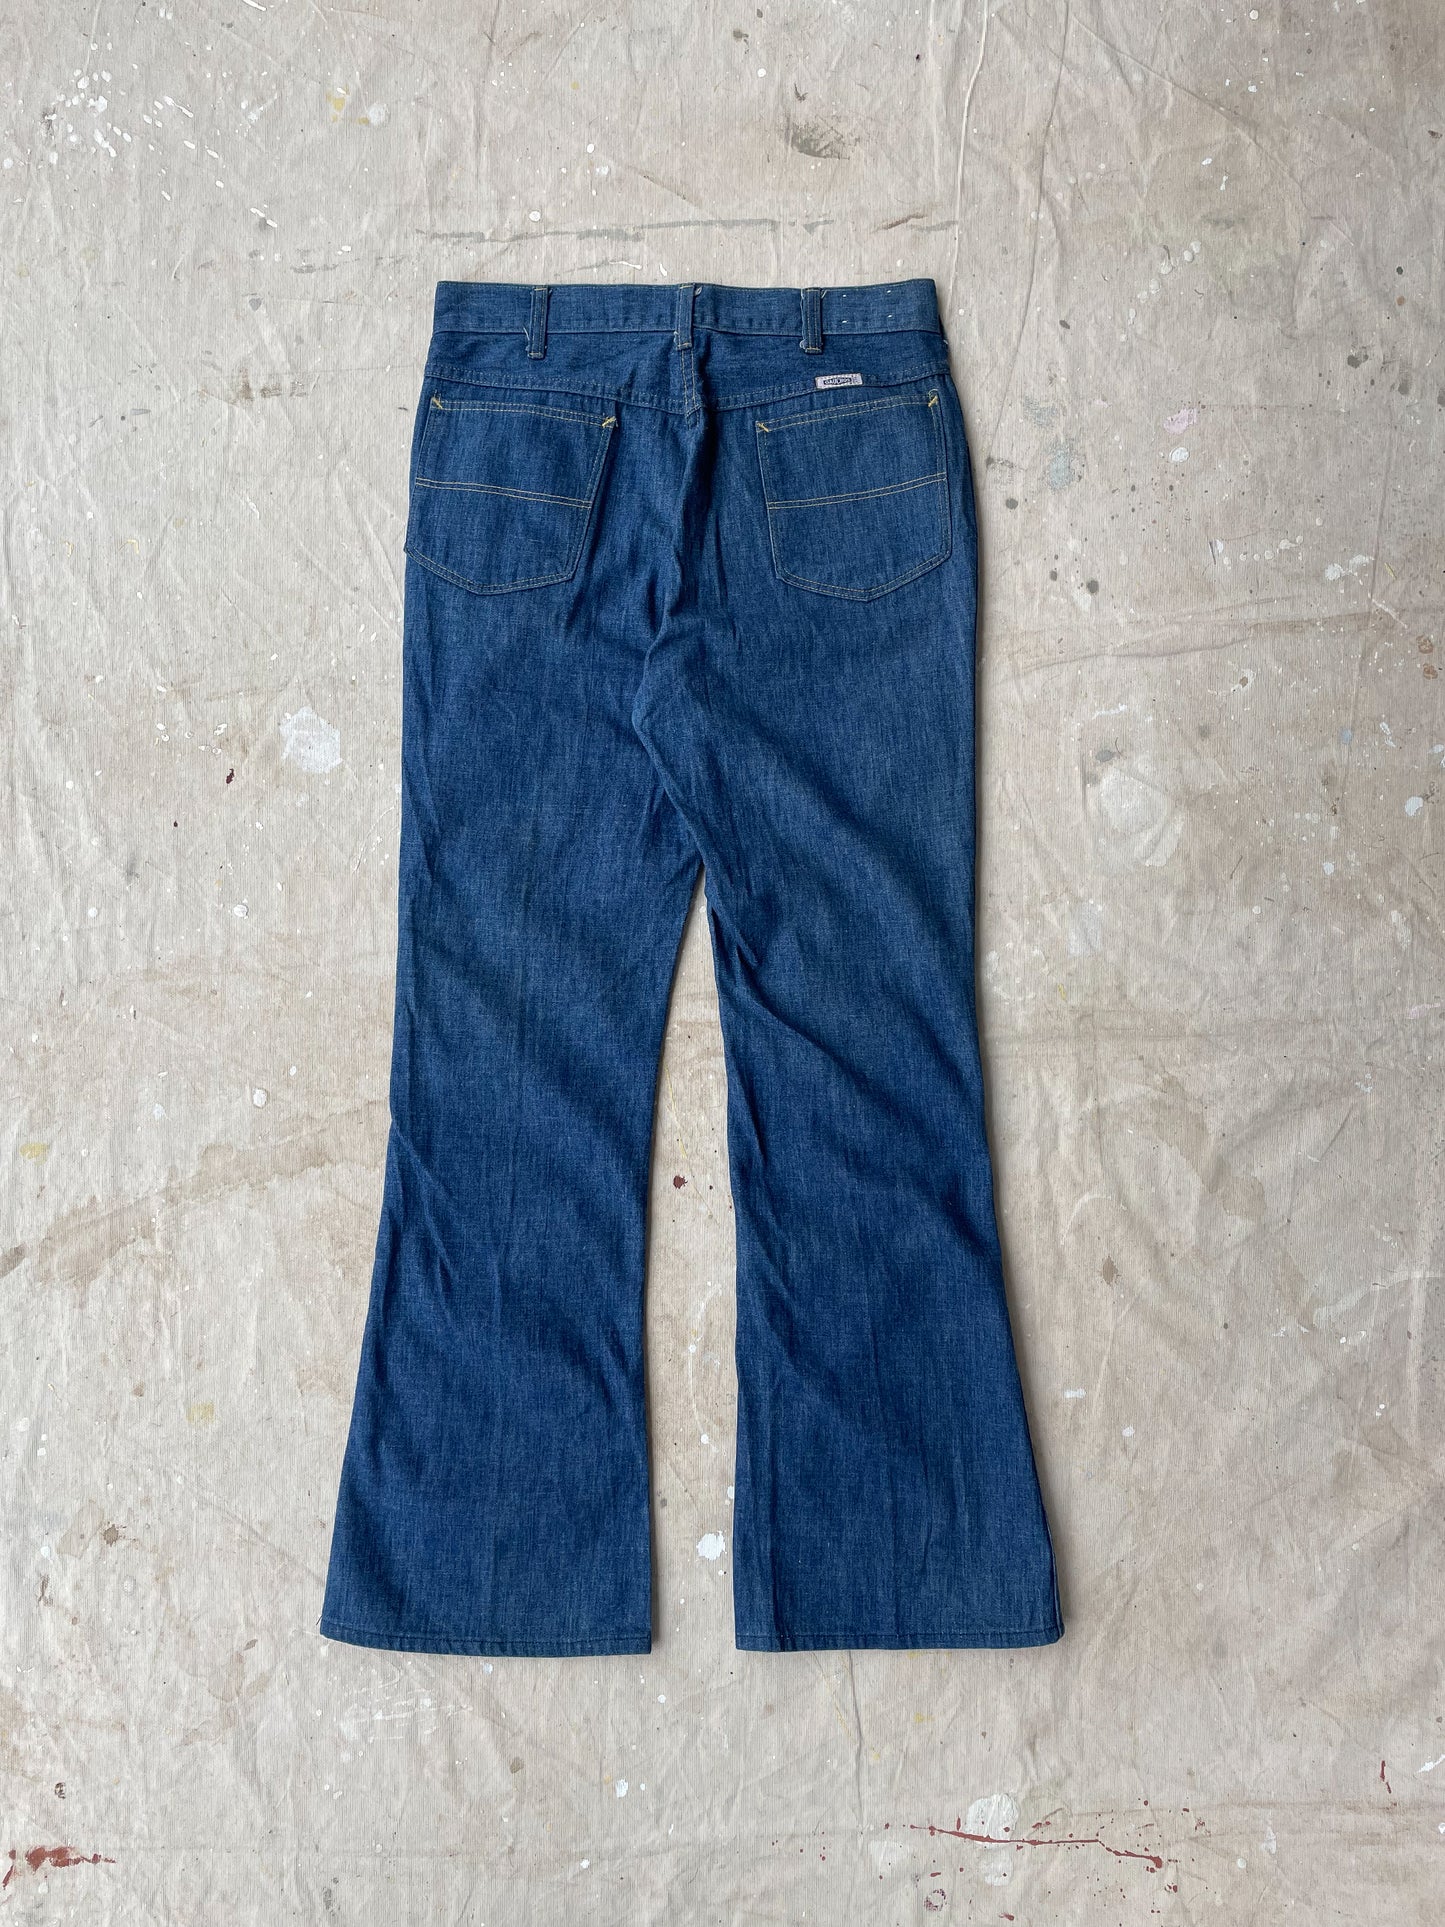 70's Gauchos Flared Jeans—[32x32]